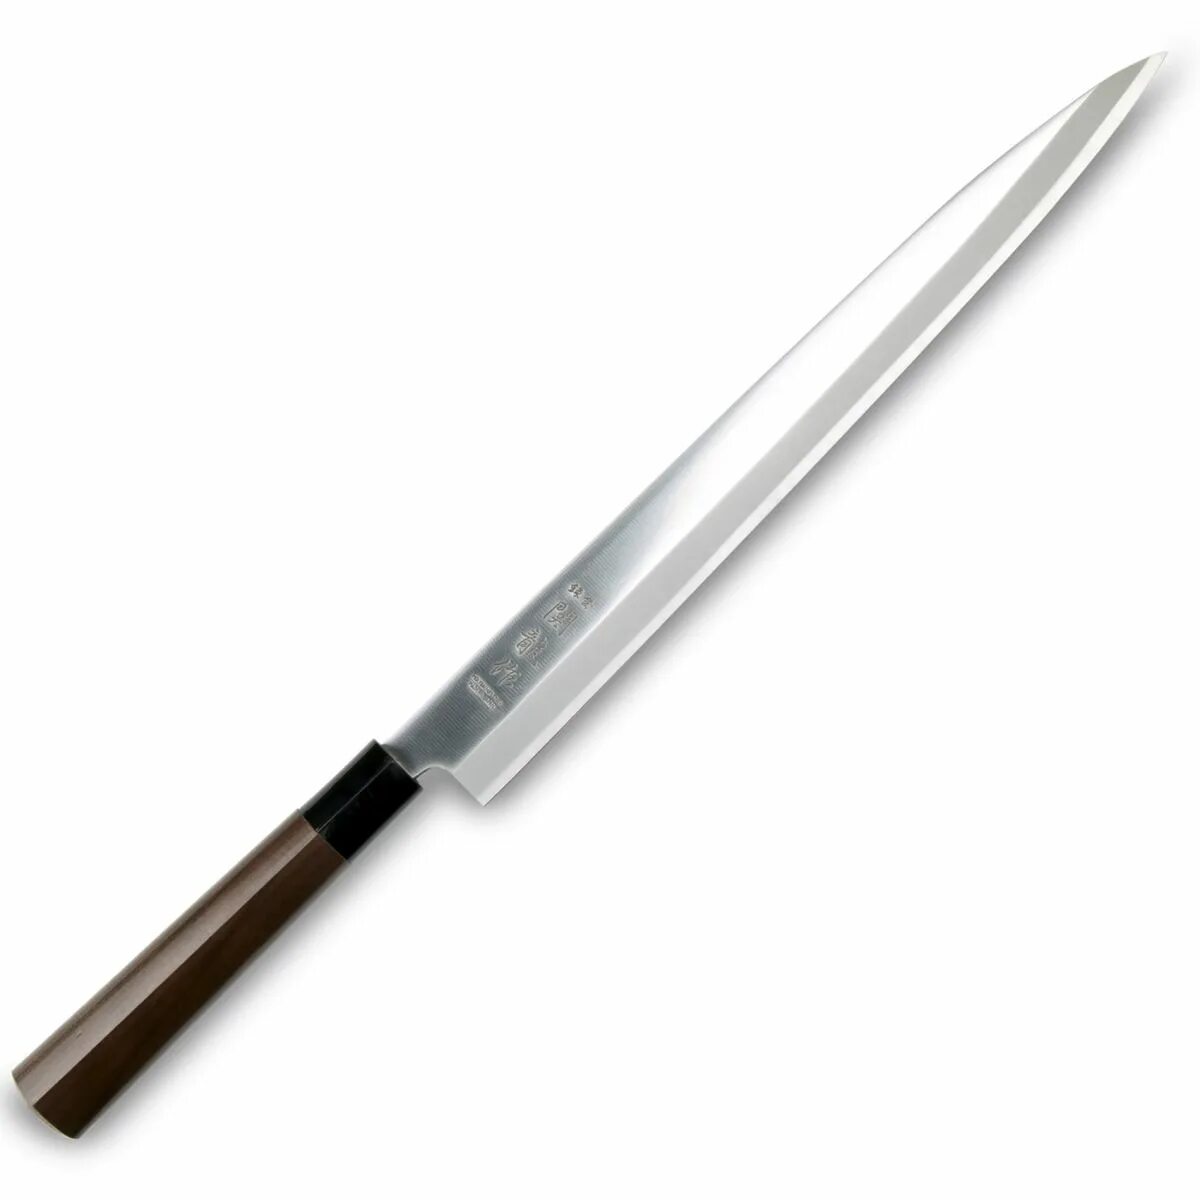 Янагибу нож. Японский нож Янагиба. Нож Янагиба sr240/s. Ножи японские Sekiryu. Японский нож для суши Янагиба.